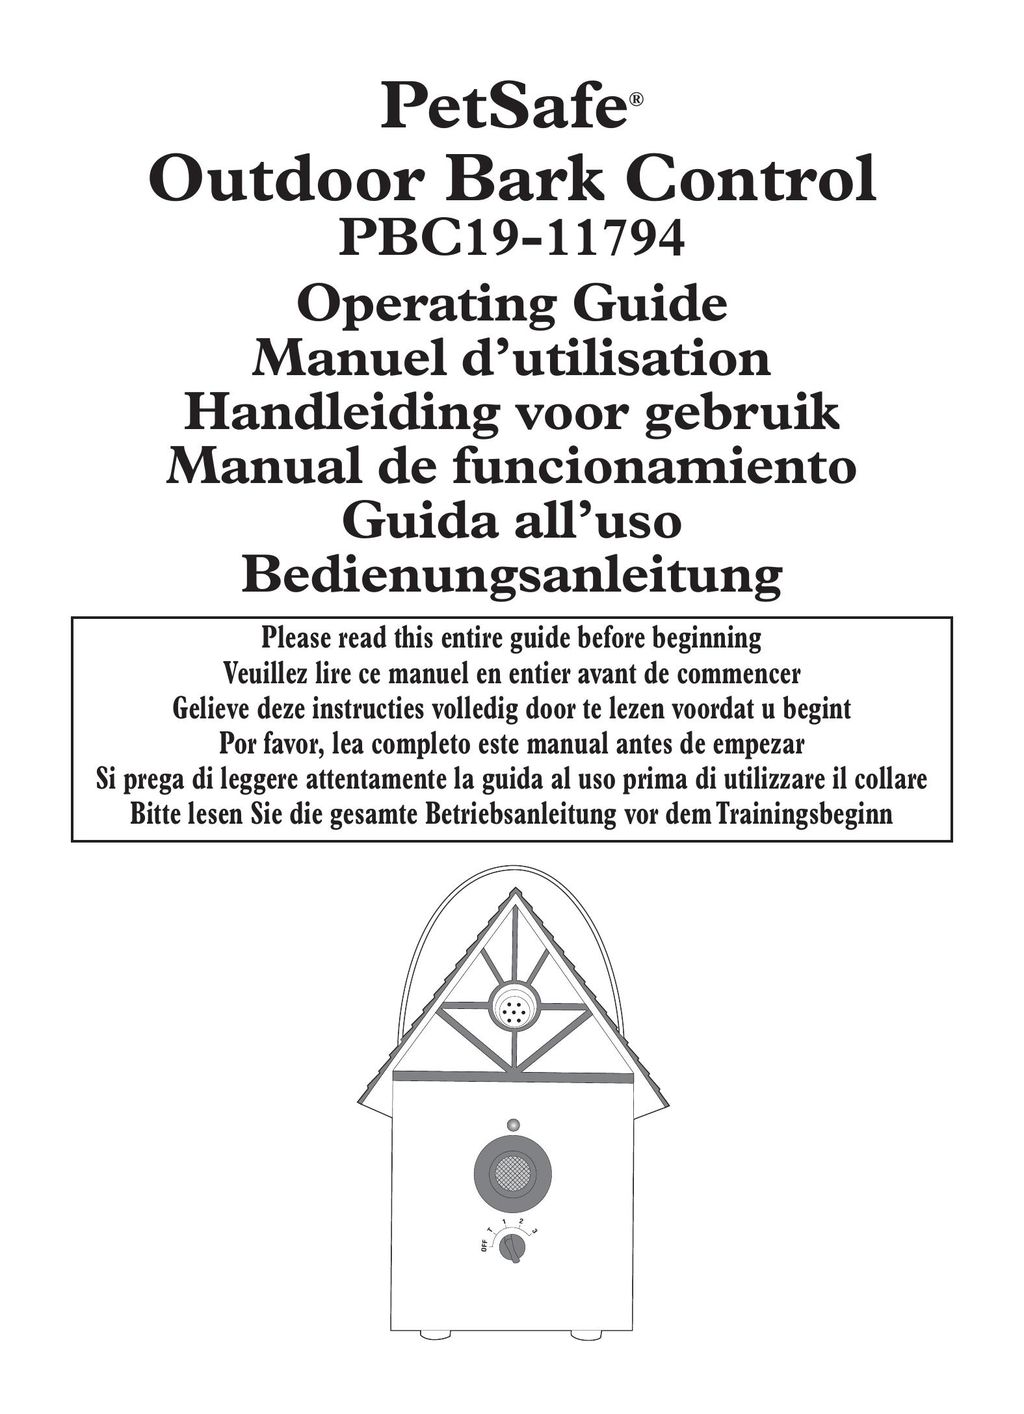 Petsafe PBC19-11794 Pet Care Product User Manual